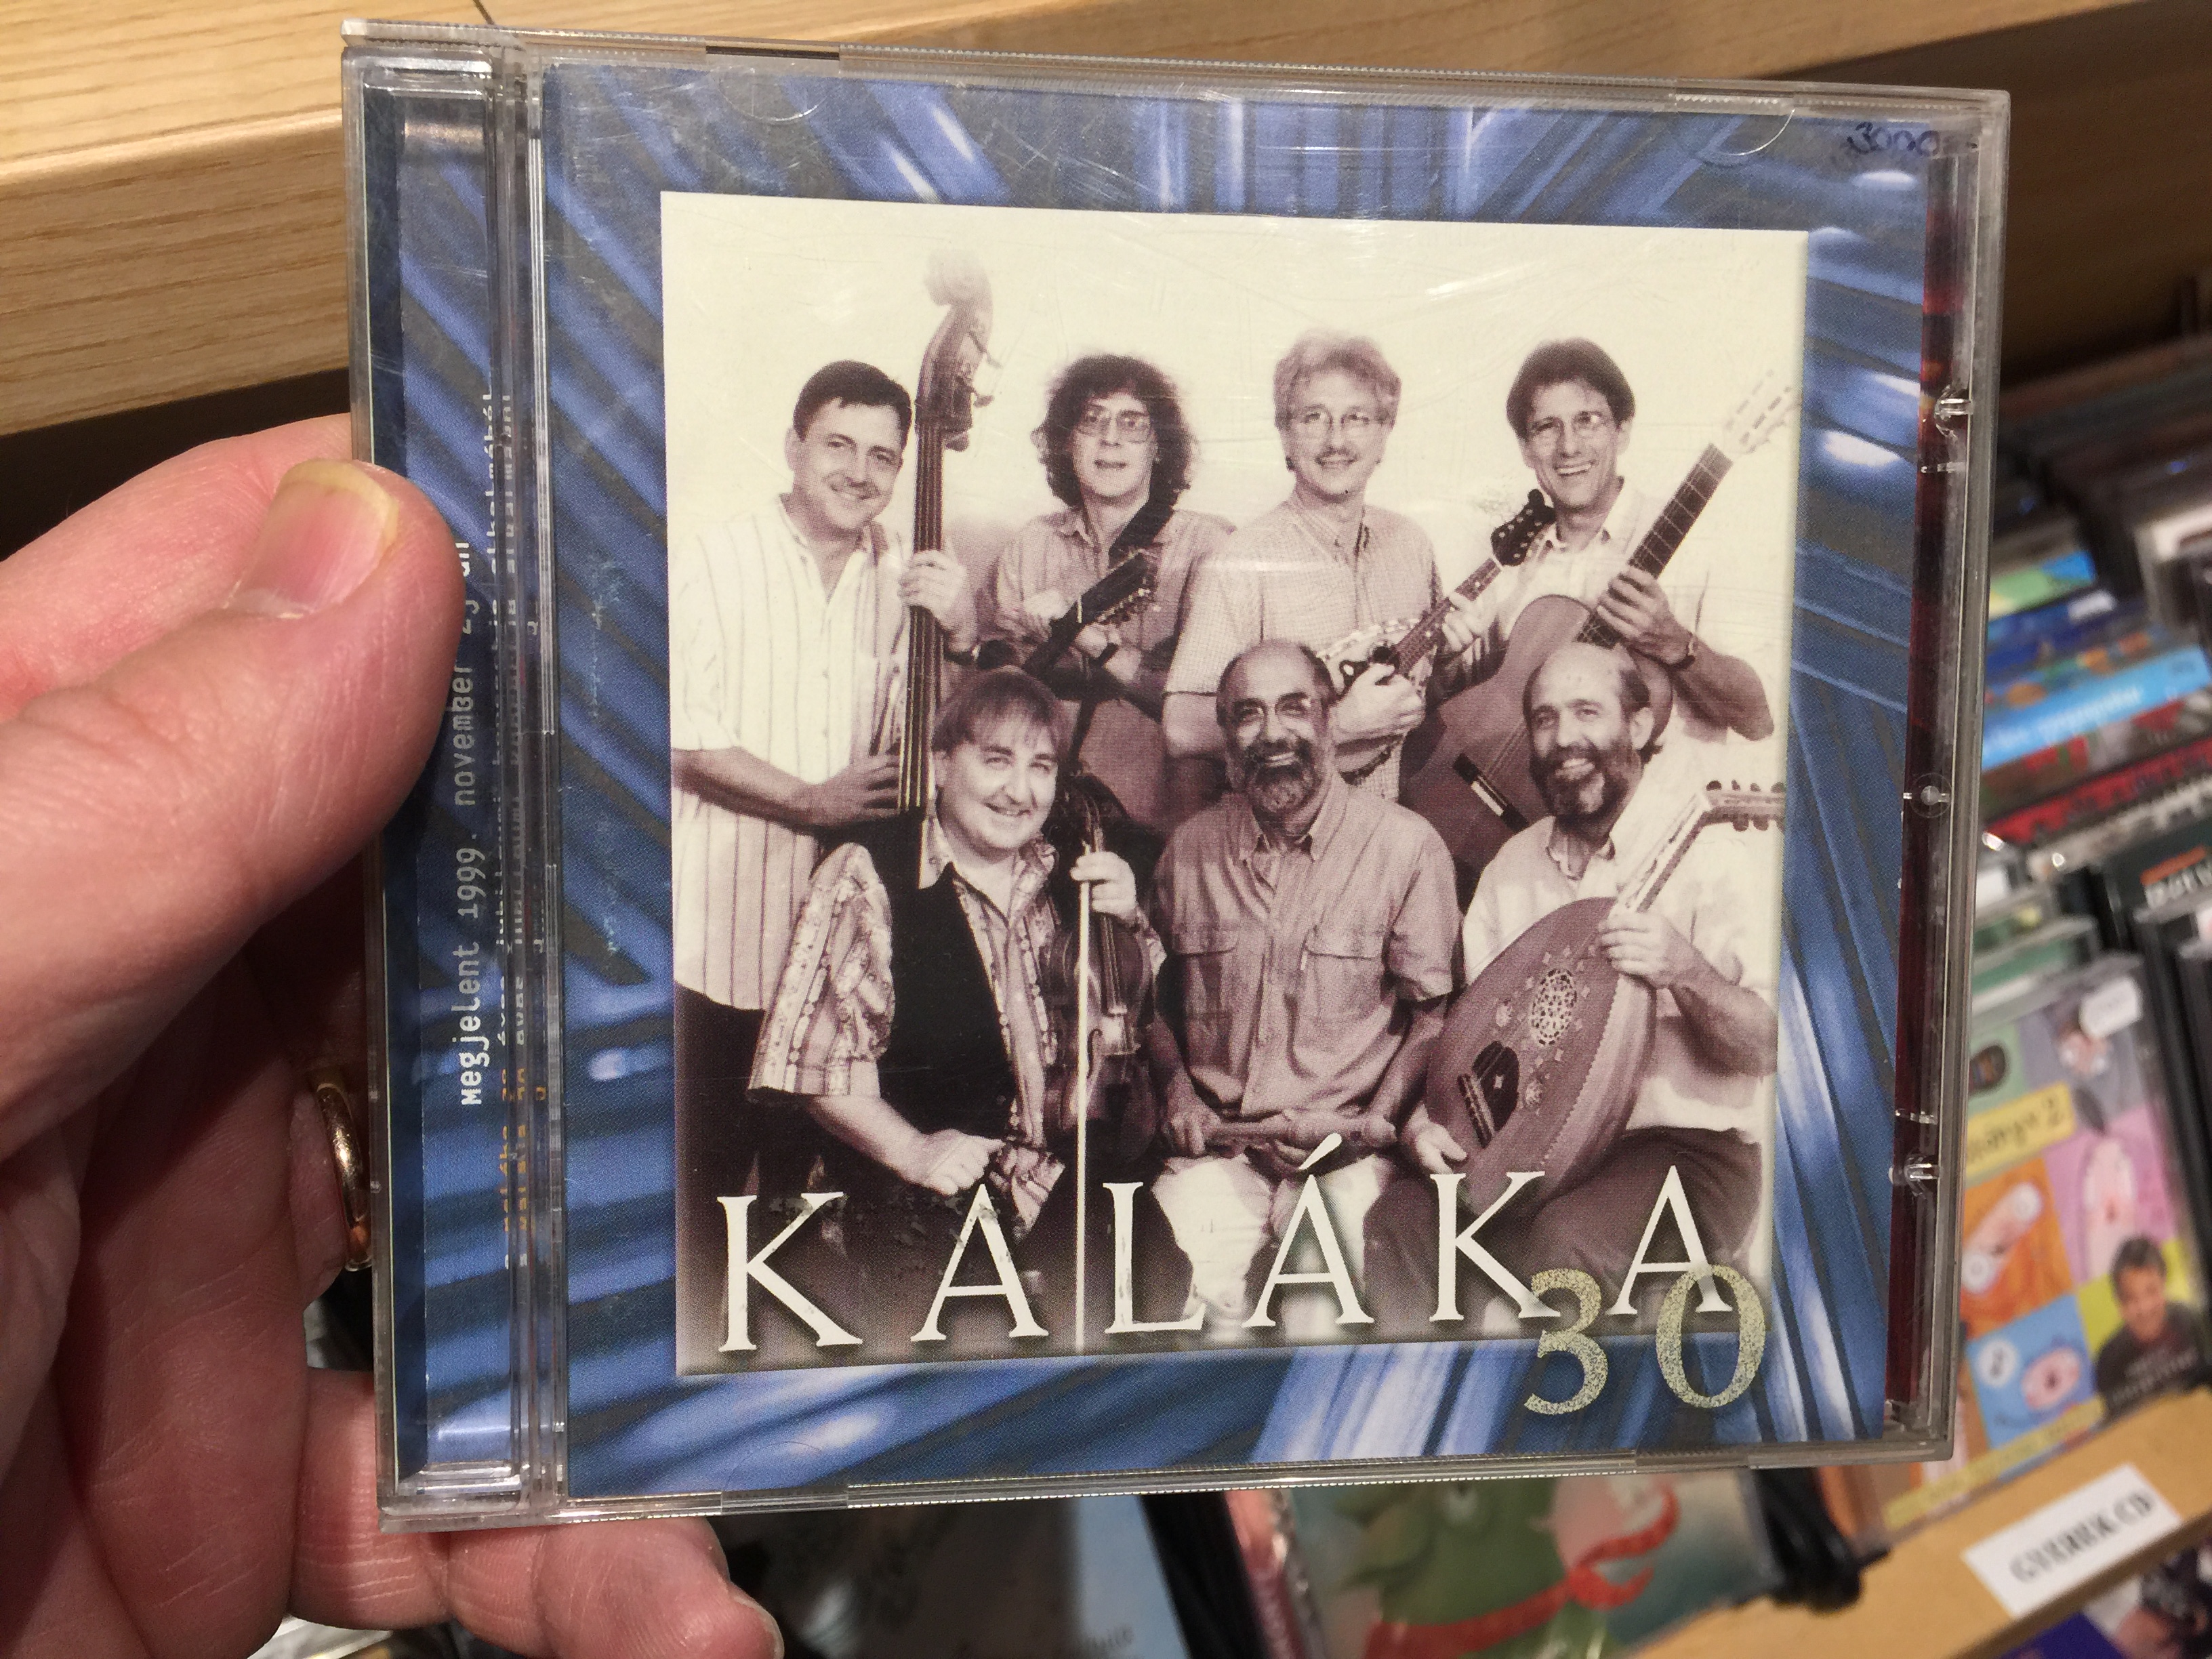 kal-ka-30-gryllus-audio-cd-1999-gcd-018-1-.jpg